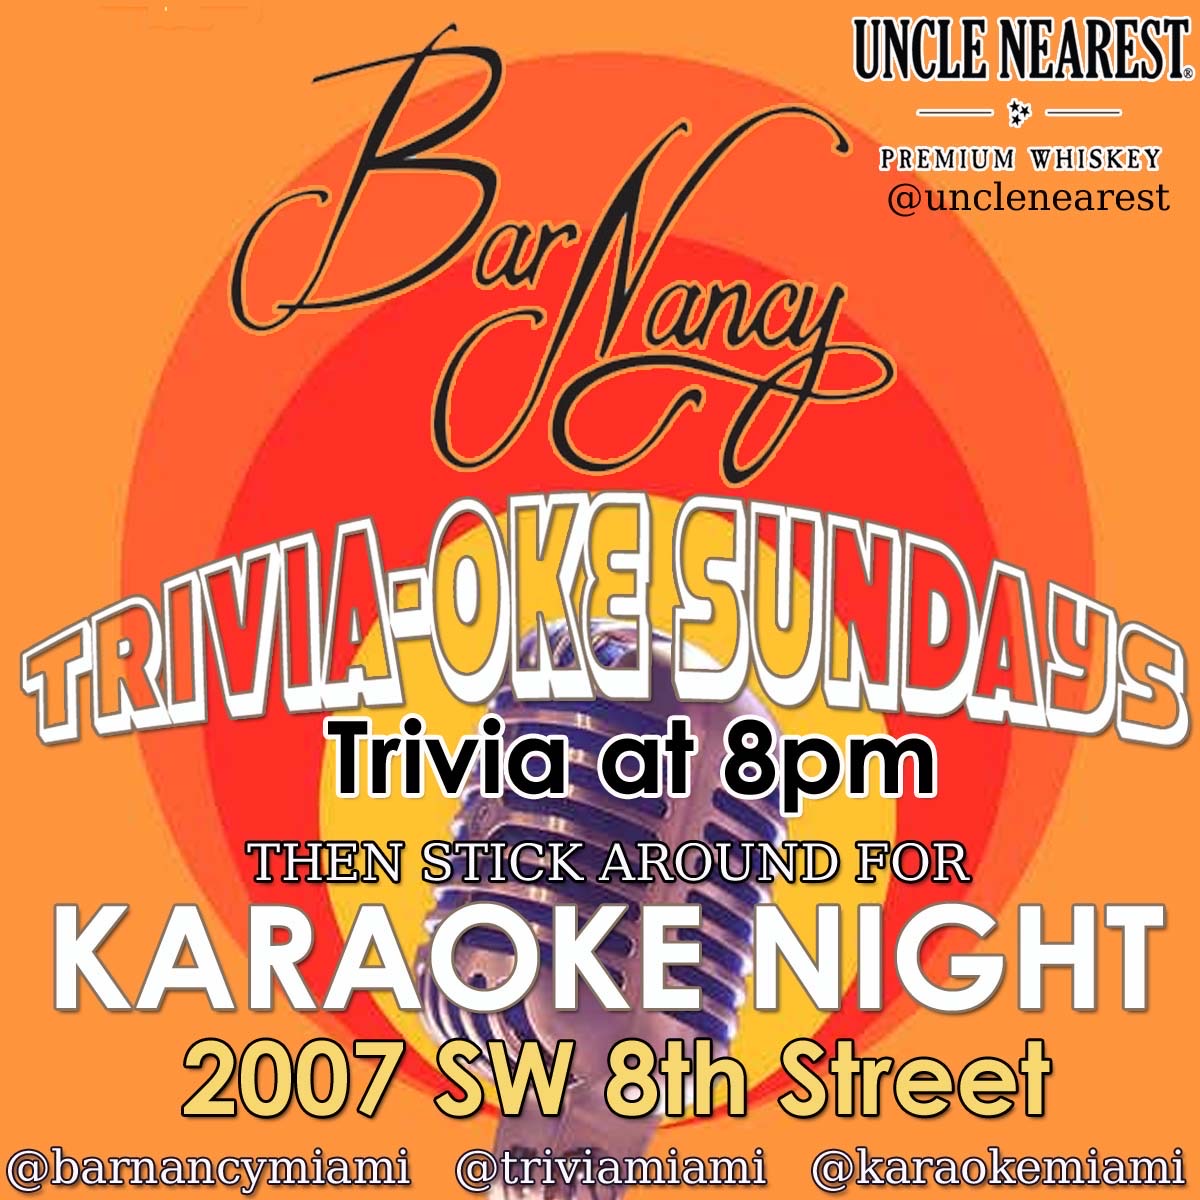 Trivia Oke Sunday and Karaoke Night at Bar Nancy